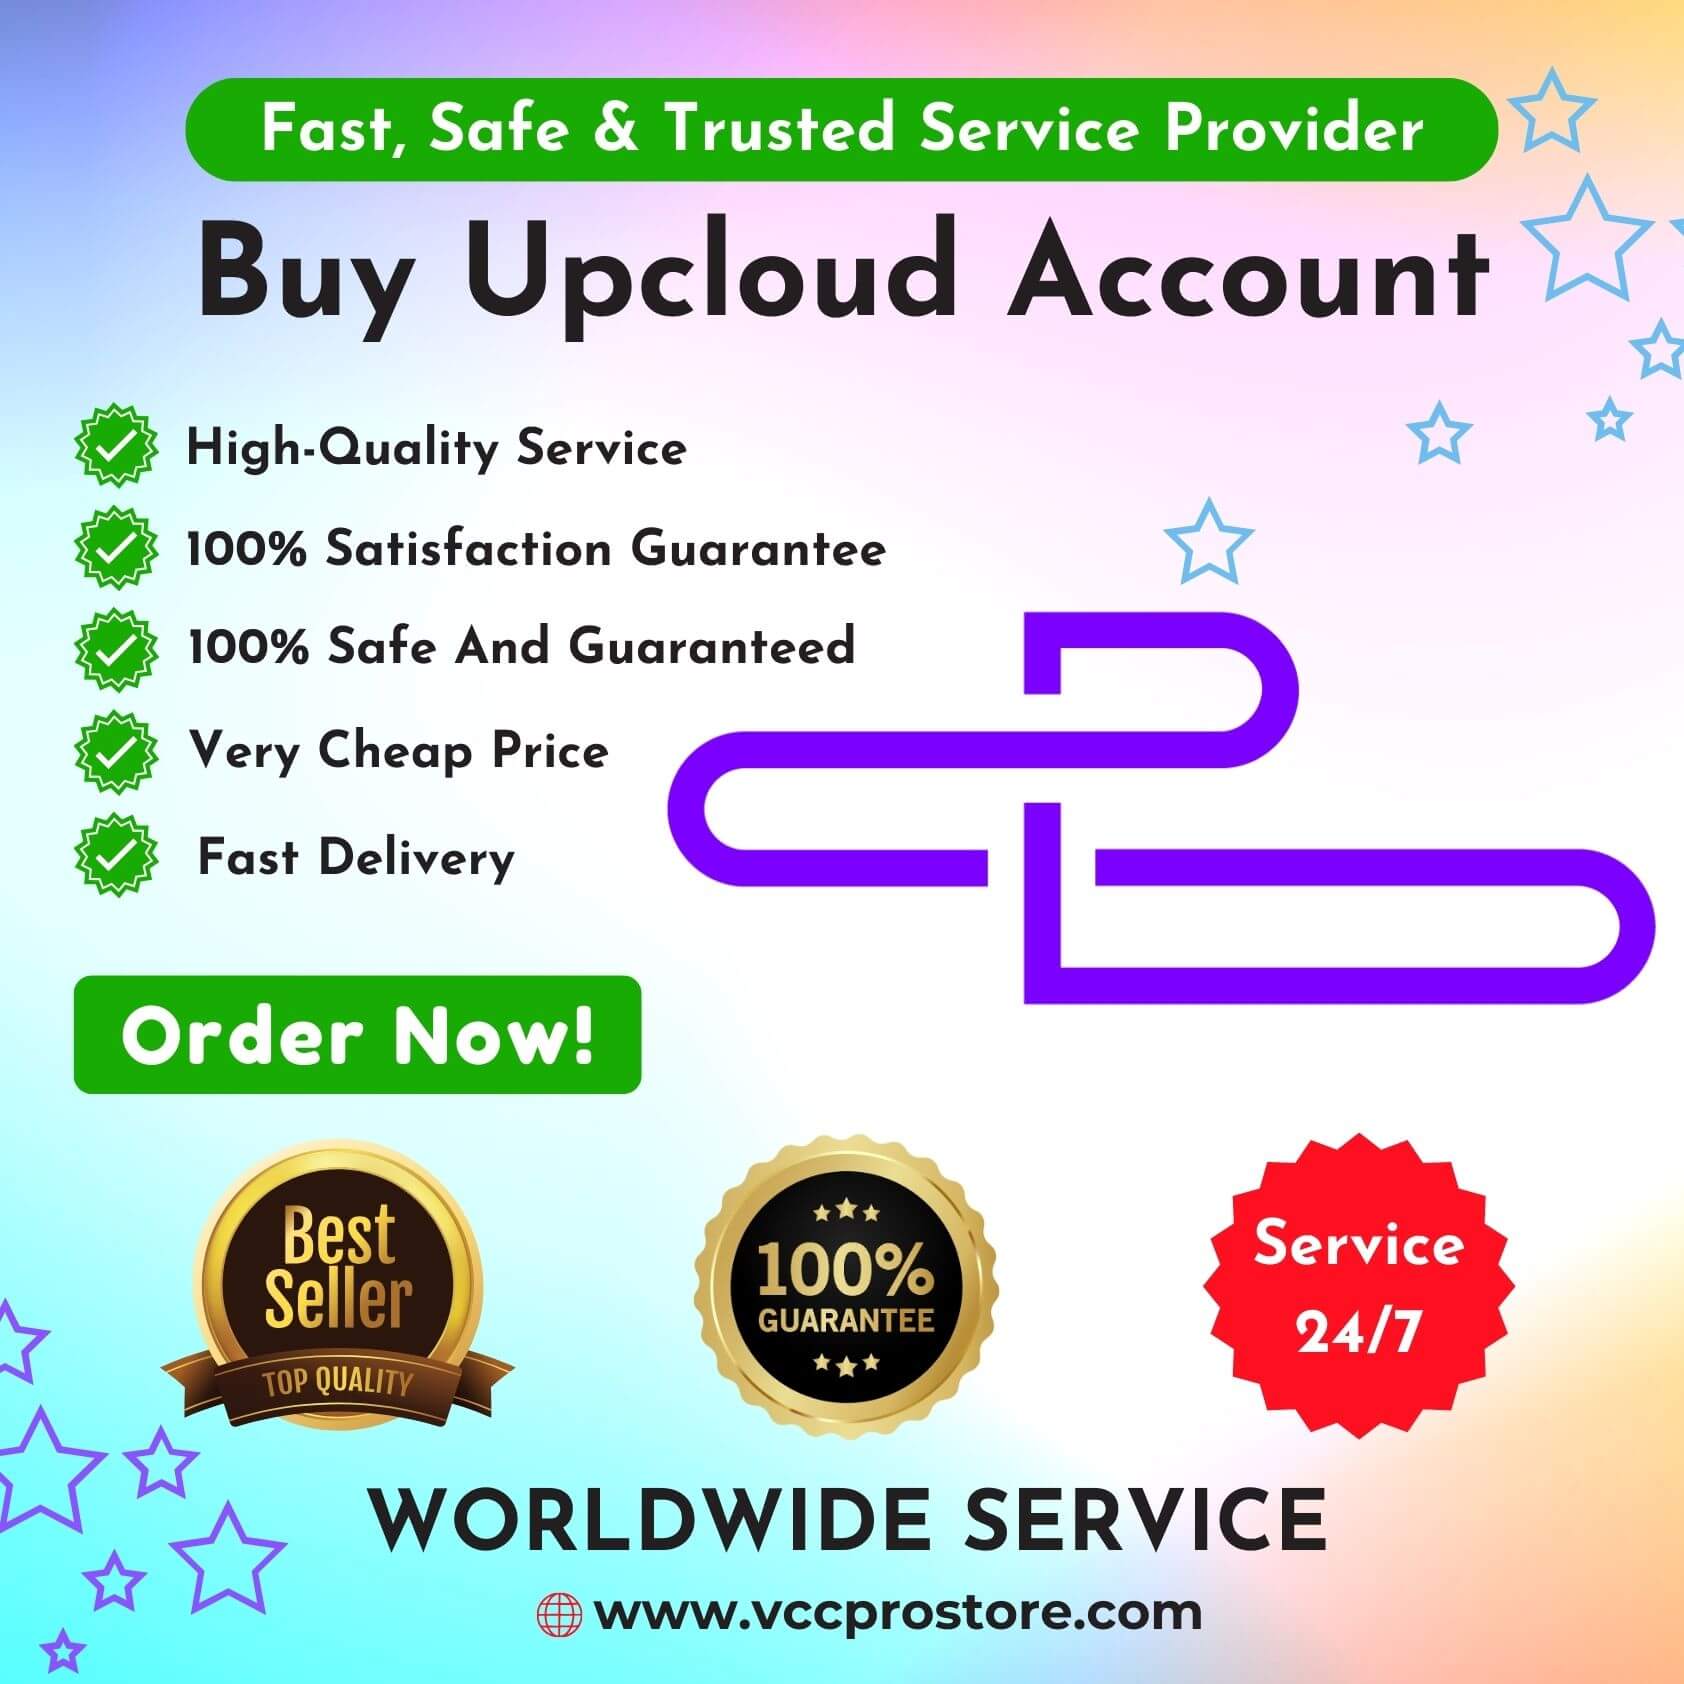 Buy Upcloud account - Get 100% Best Verified UpCloud Account